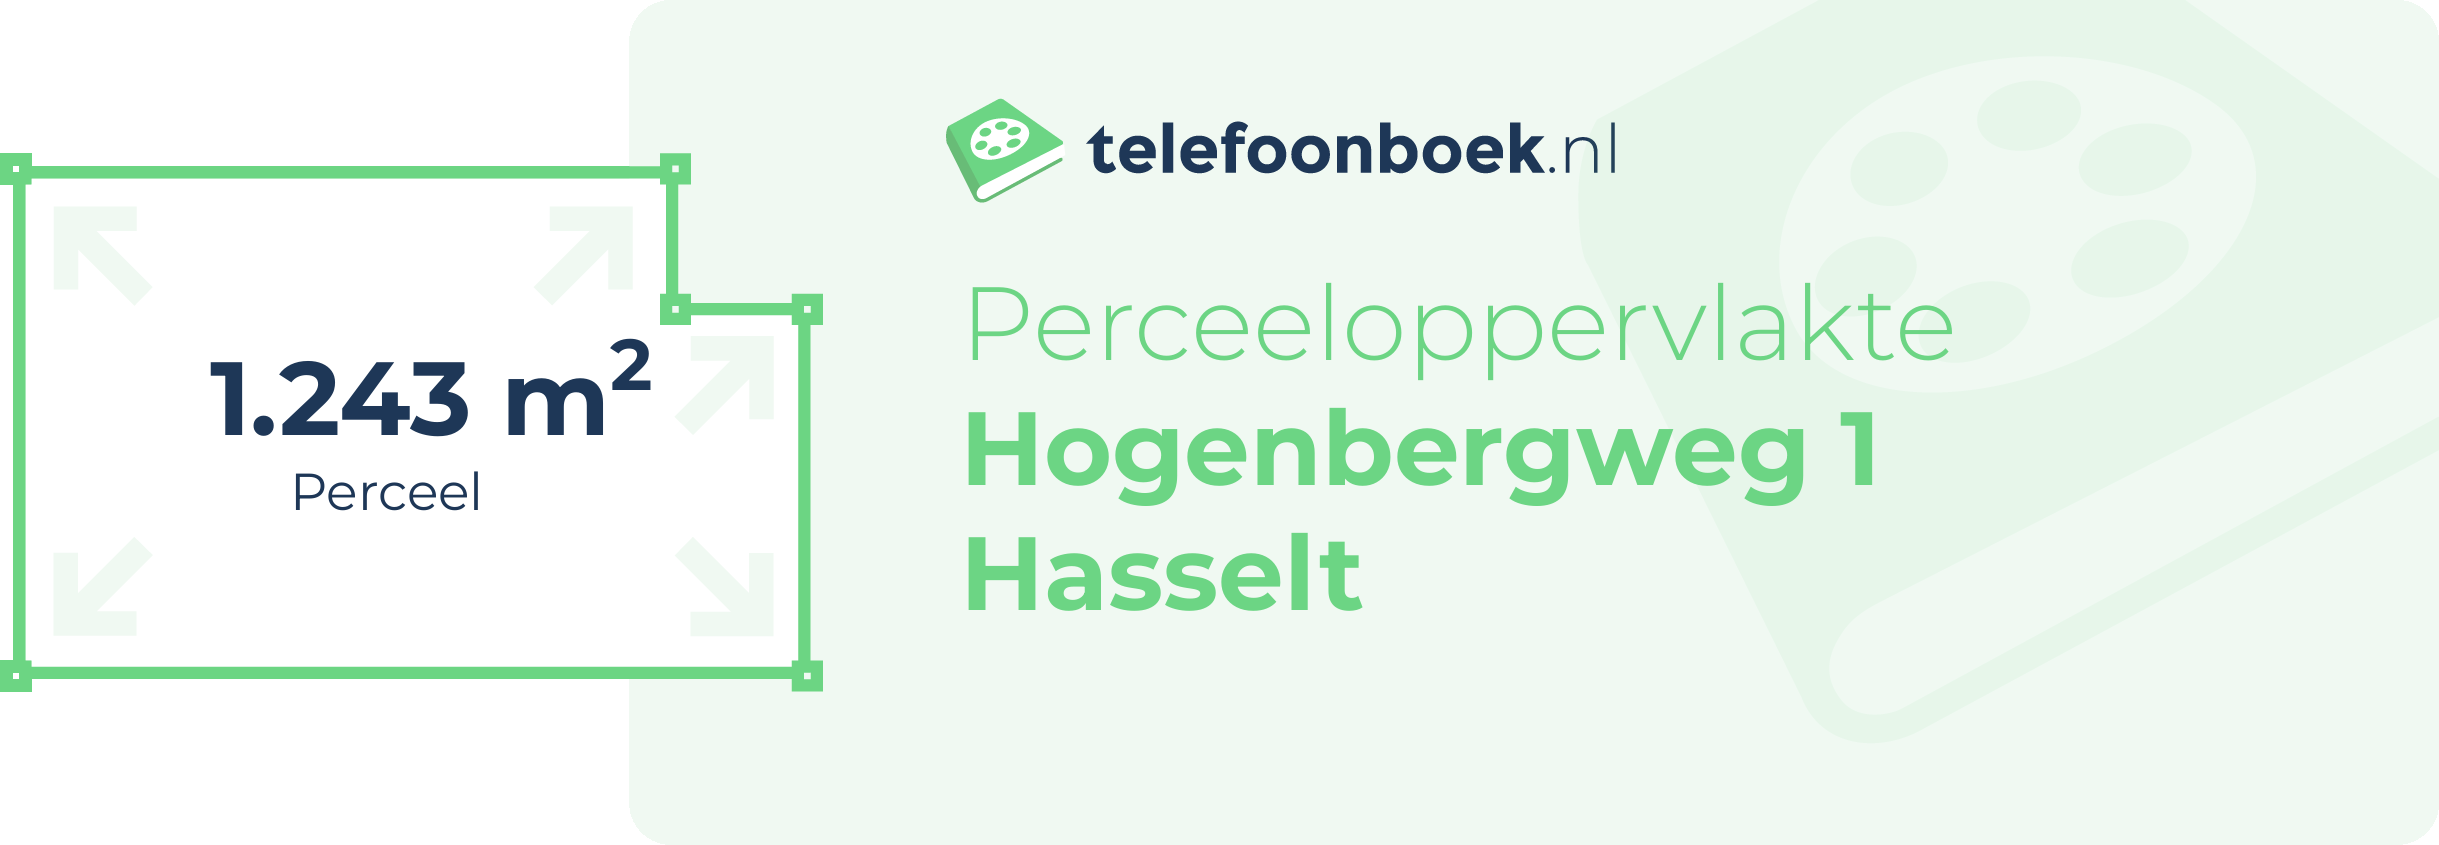 Perceeloppervlakte Hogenbergweg 1 Hasselt